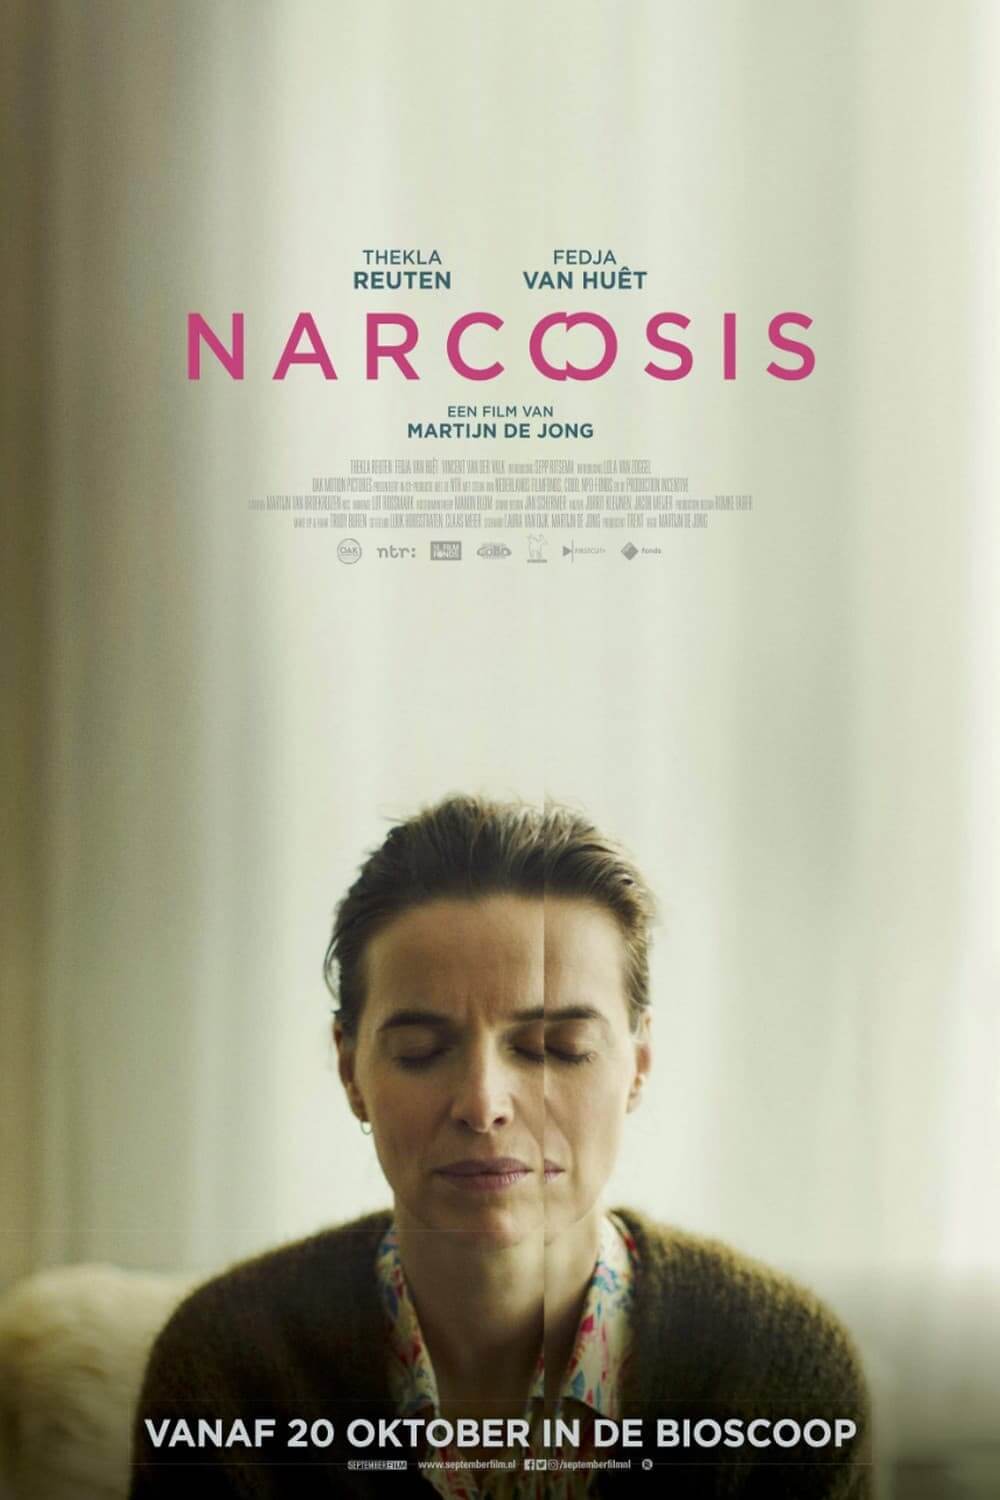 نارکوسیس (Narcosis)